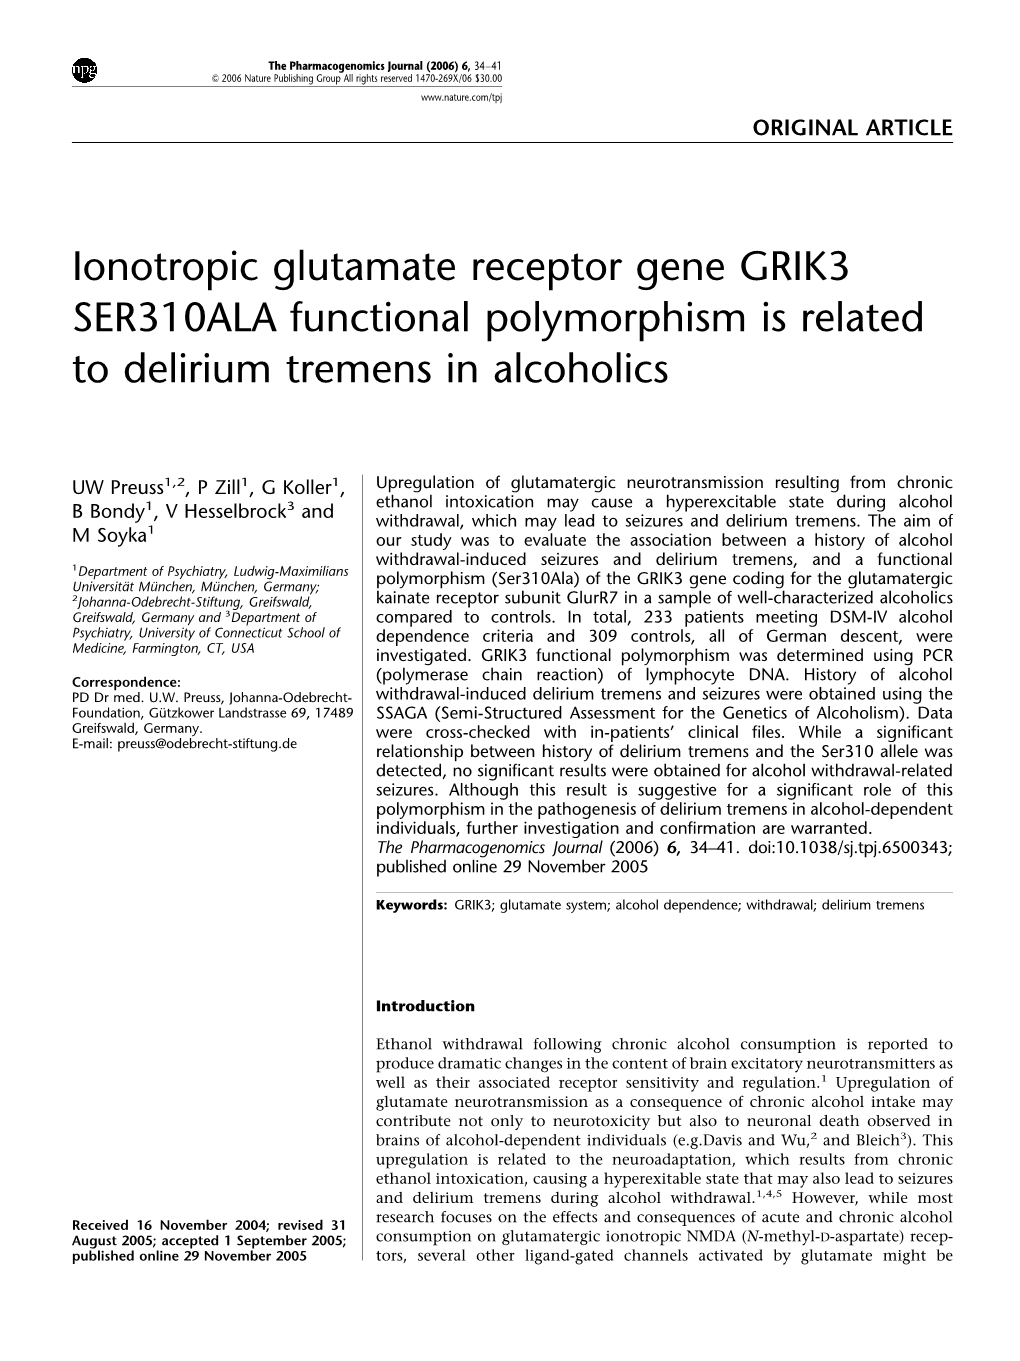 Ionotropic Glutamate Receptor Gene GRIK3 SER310ALA Functional Polymorphism Is Related to Delirium Tremens in Alcoholics